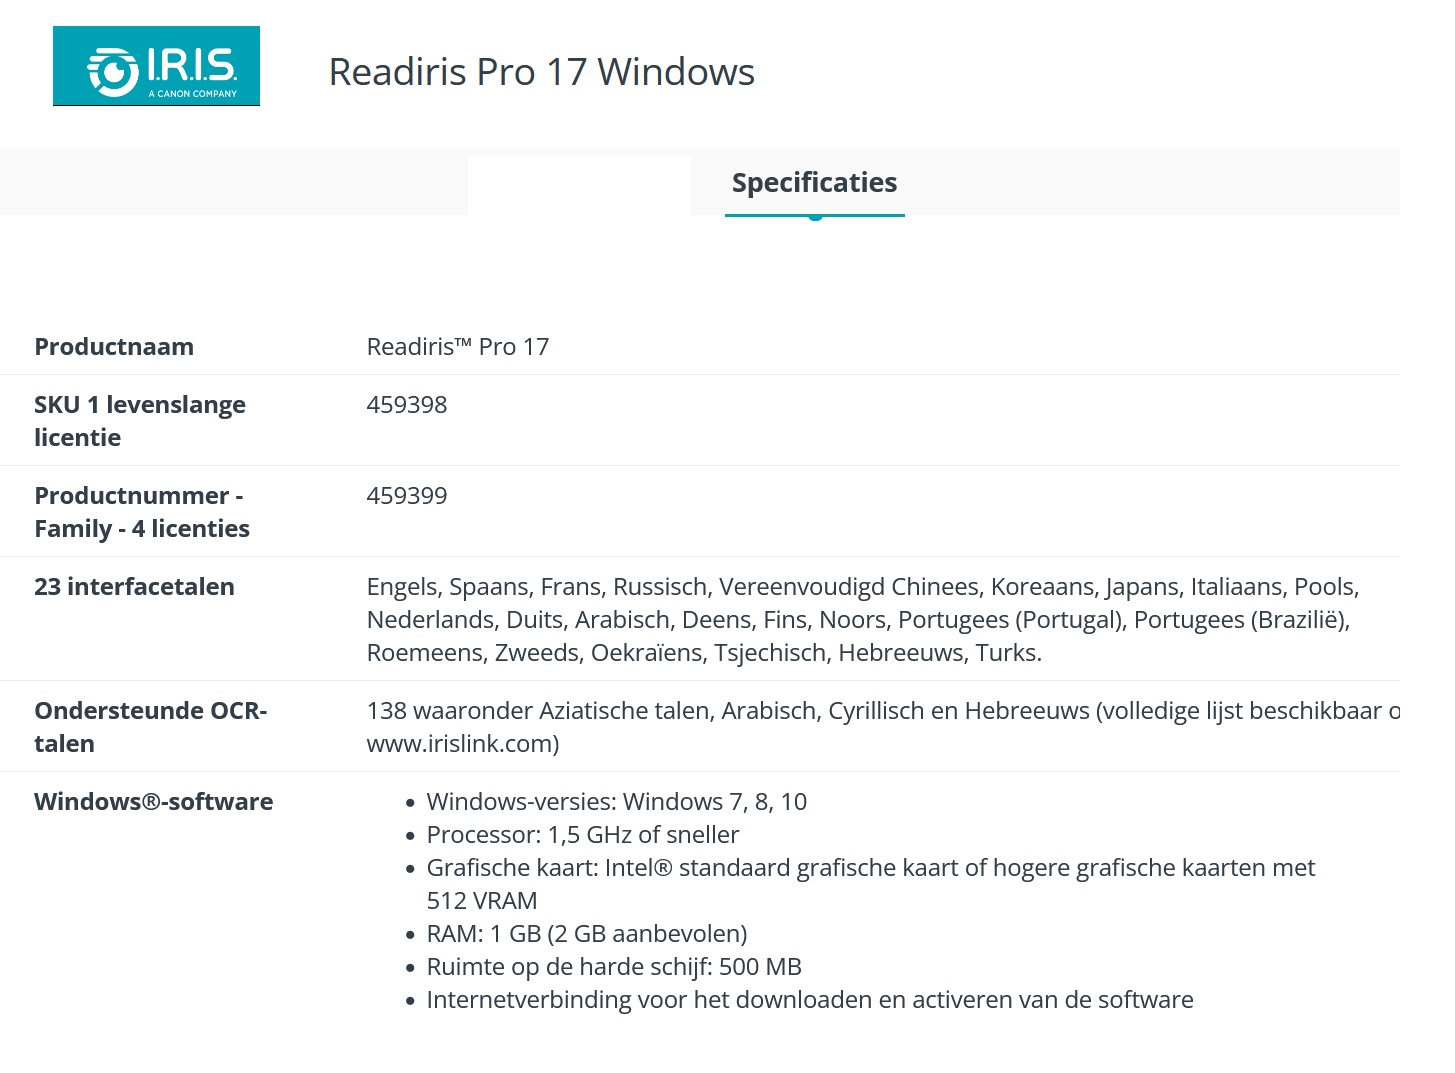 toegevoegd document 4 van Readiris Pro 17 Windows  